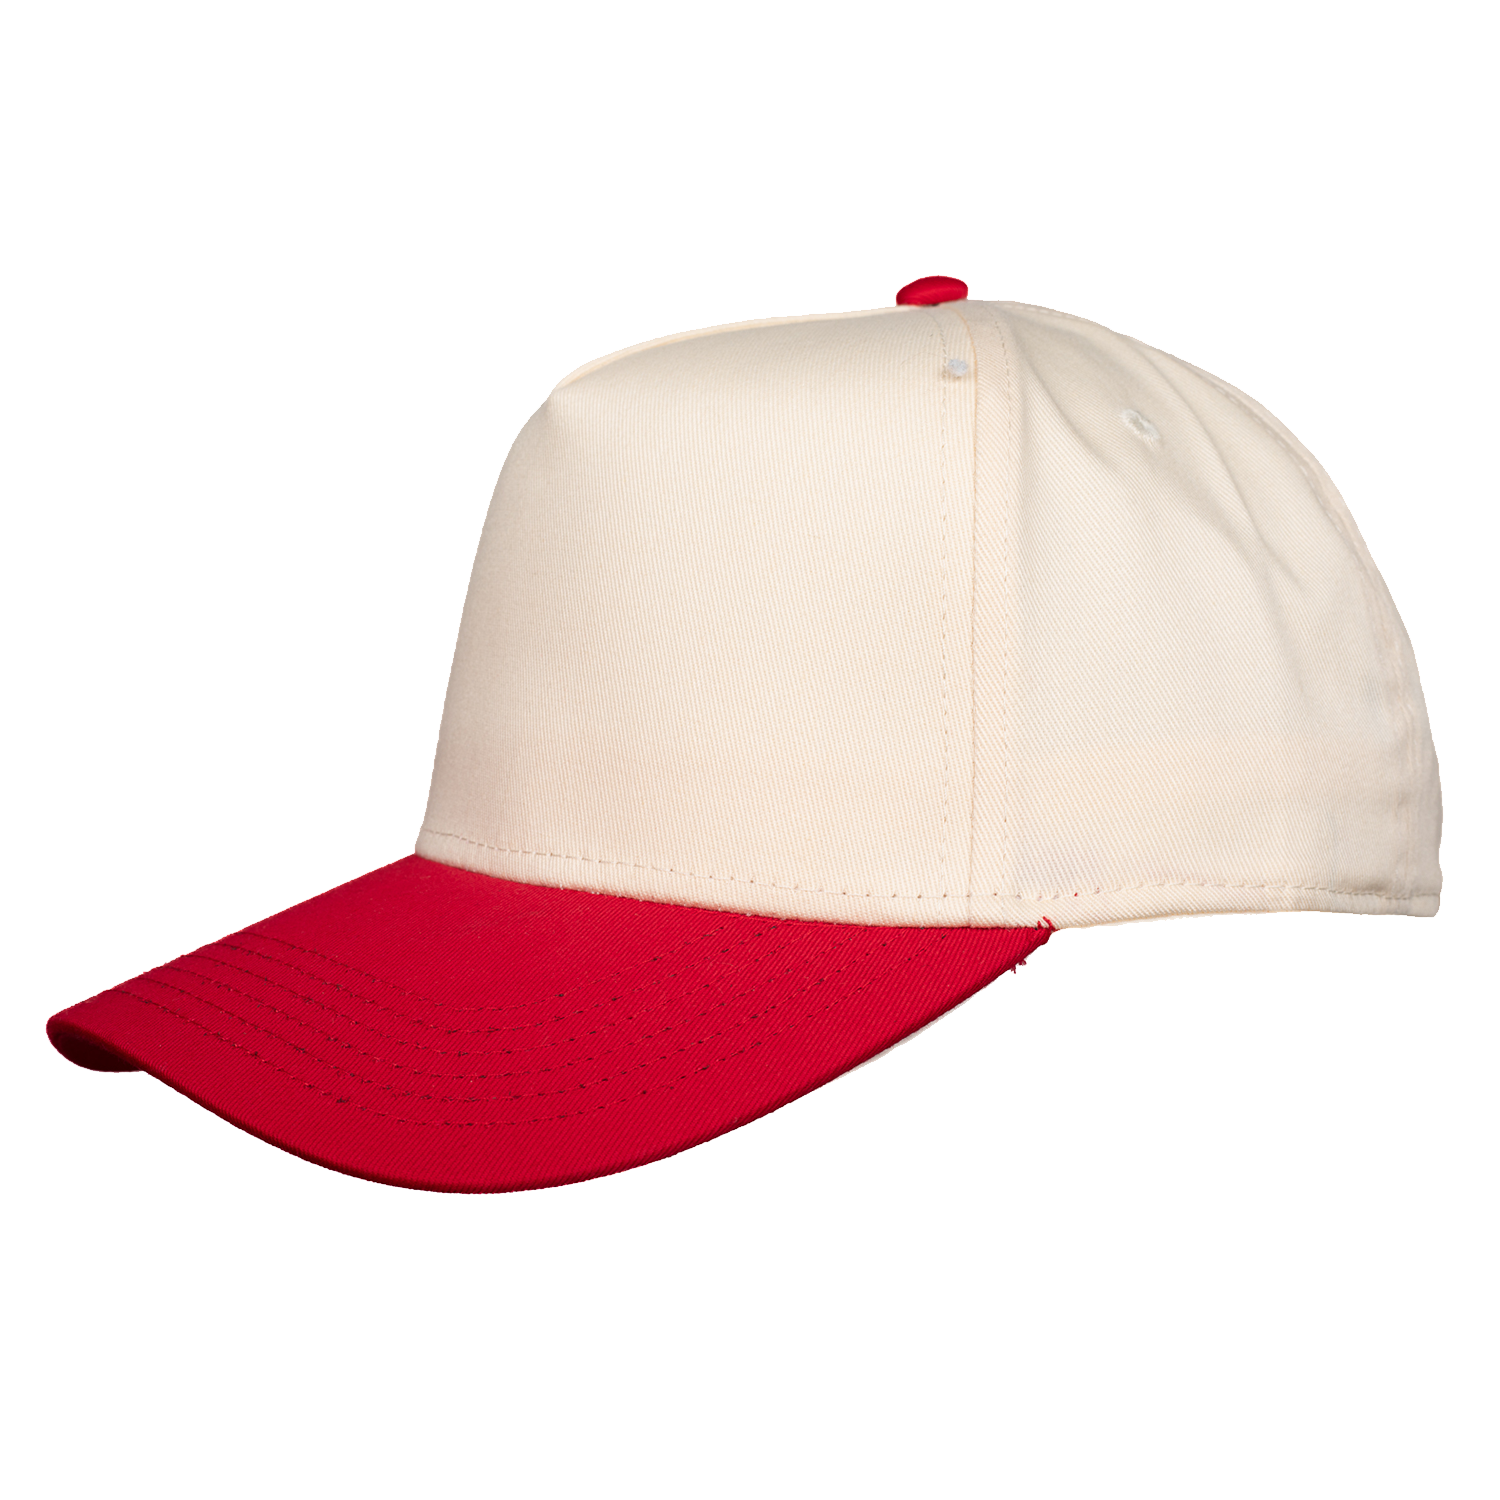 Red / Natural OTTO Mid Profile Baseball Cap